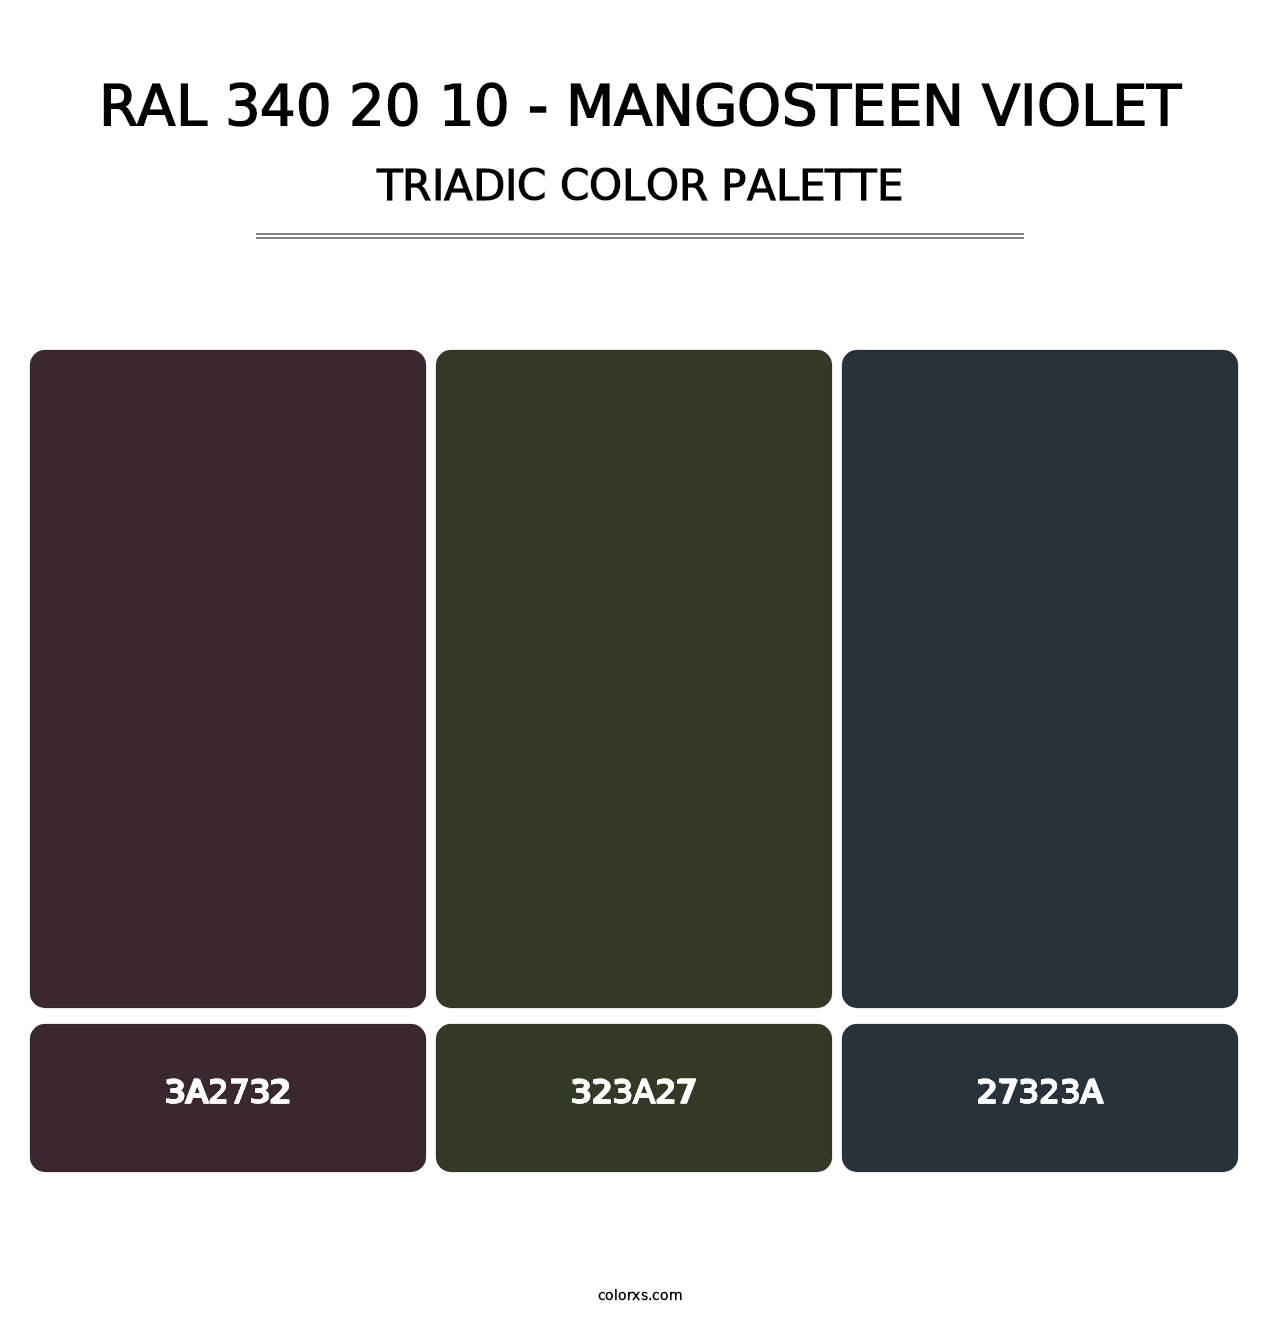 RAL 340 20 10 - Mangosteen Violet - Triadic Color Palette